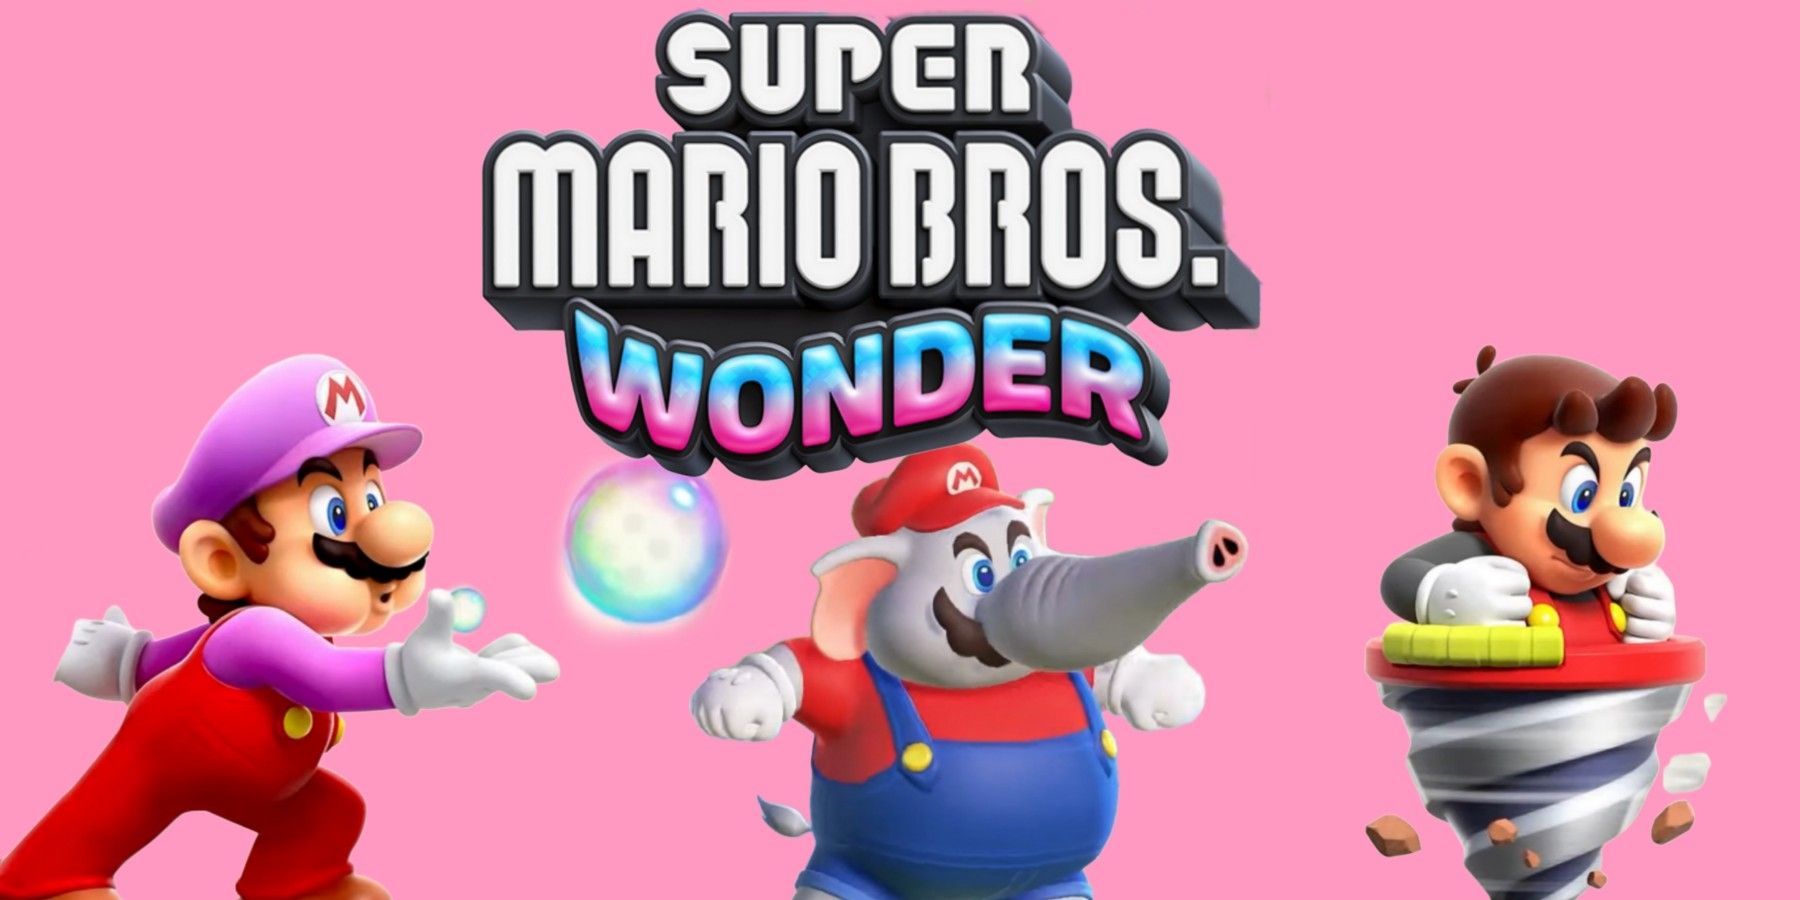 Every New Enemy In Super Mario Bros. Wonder